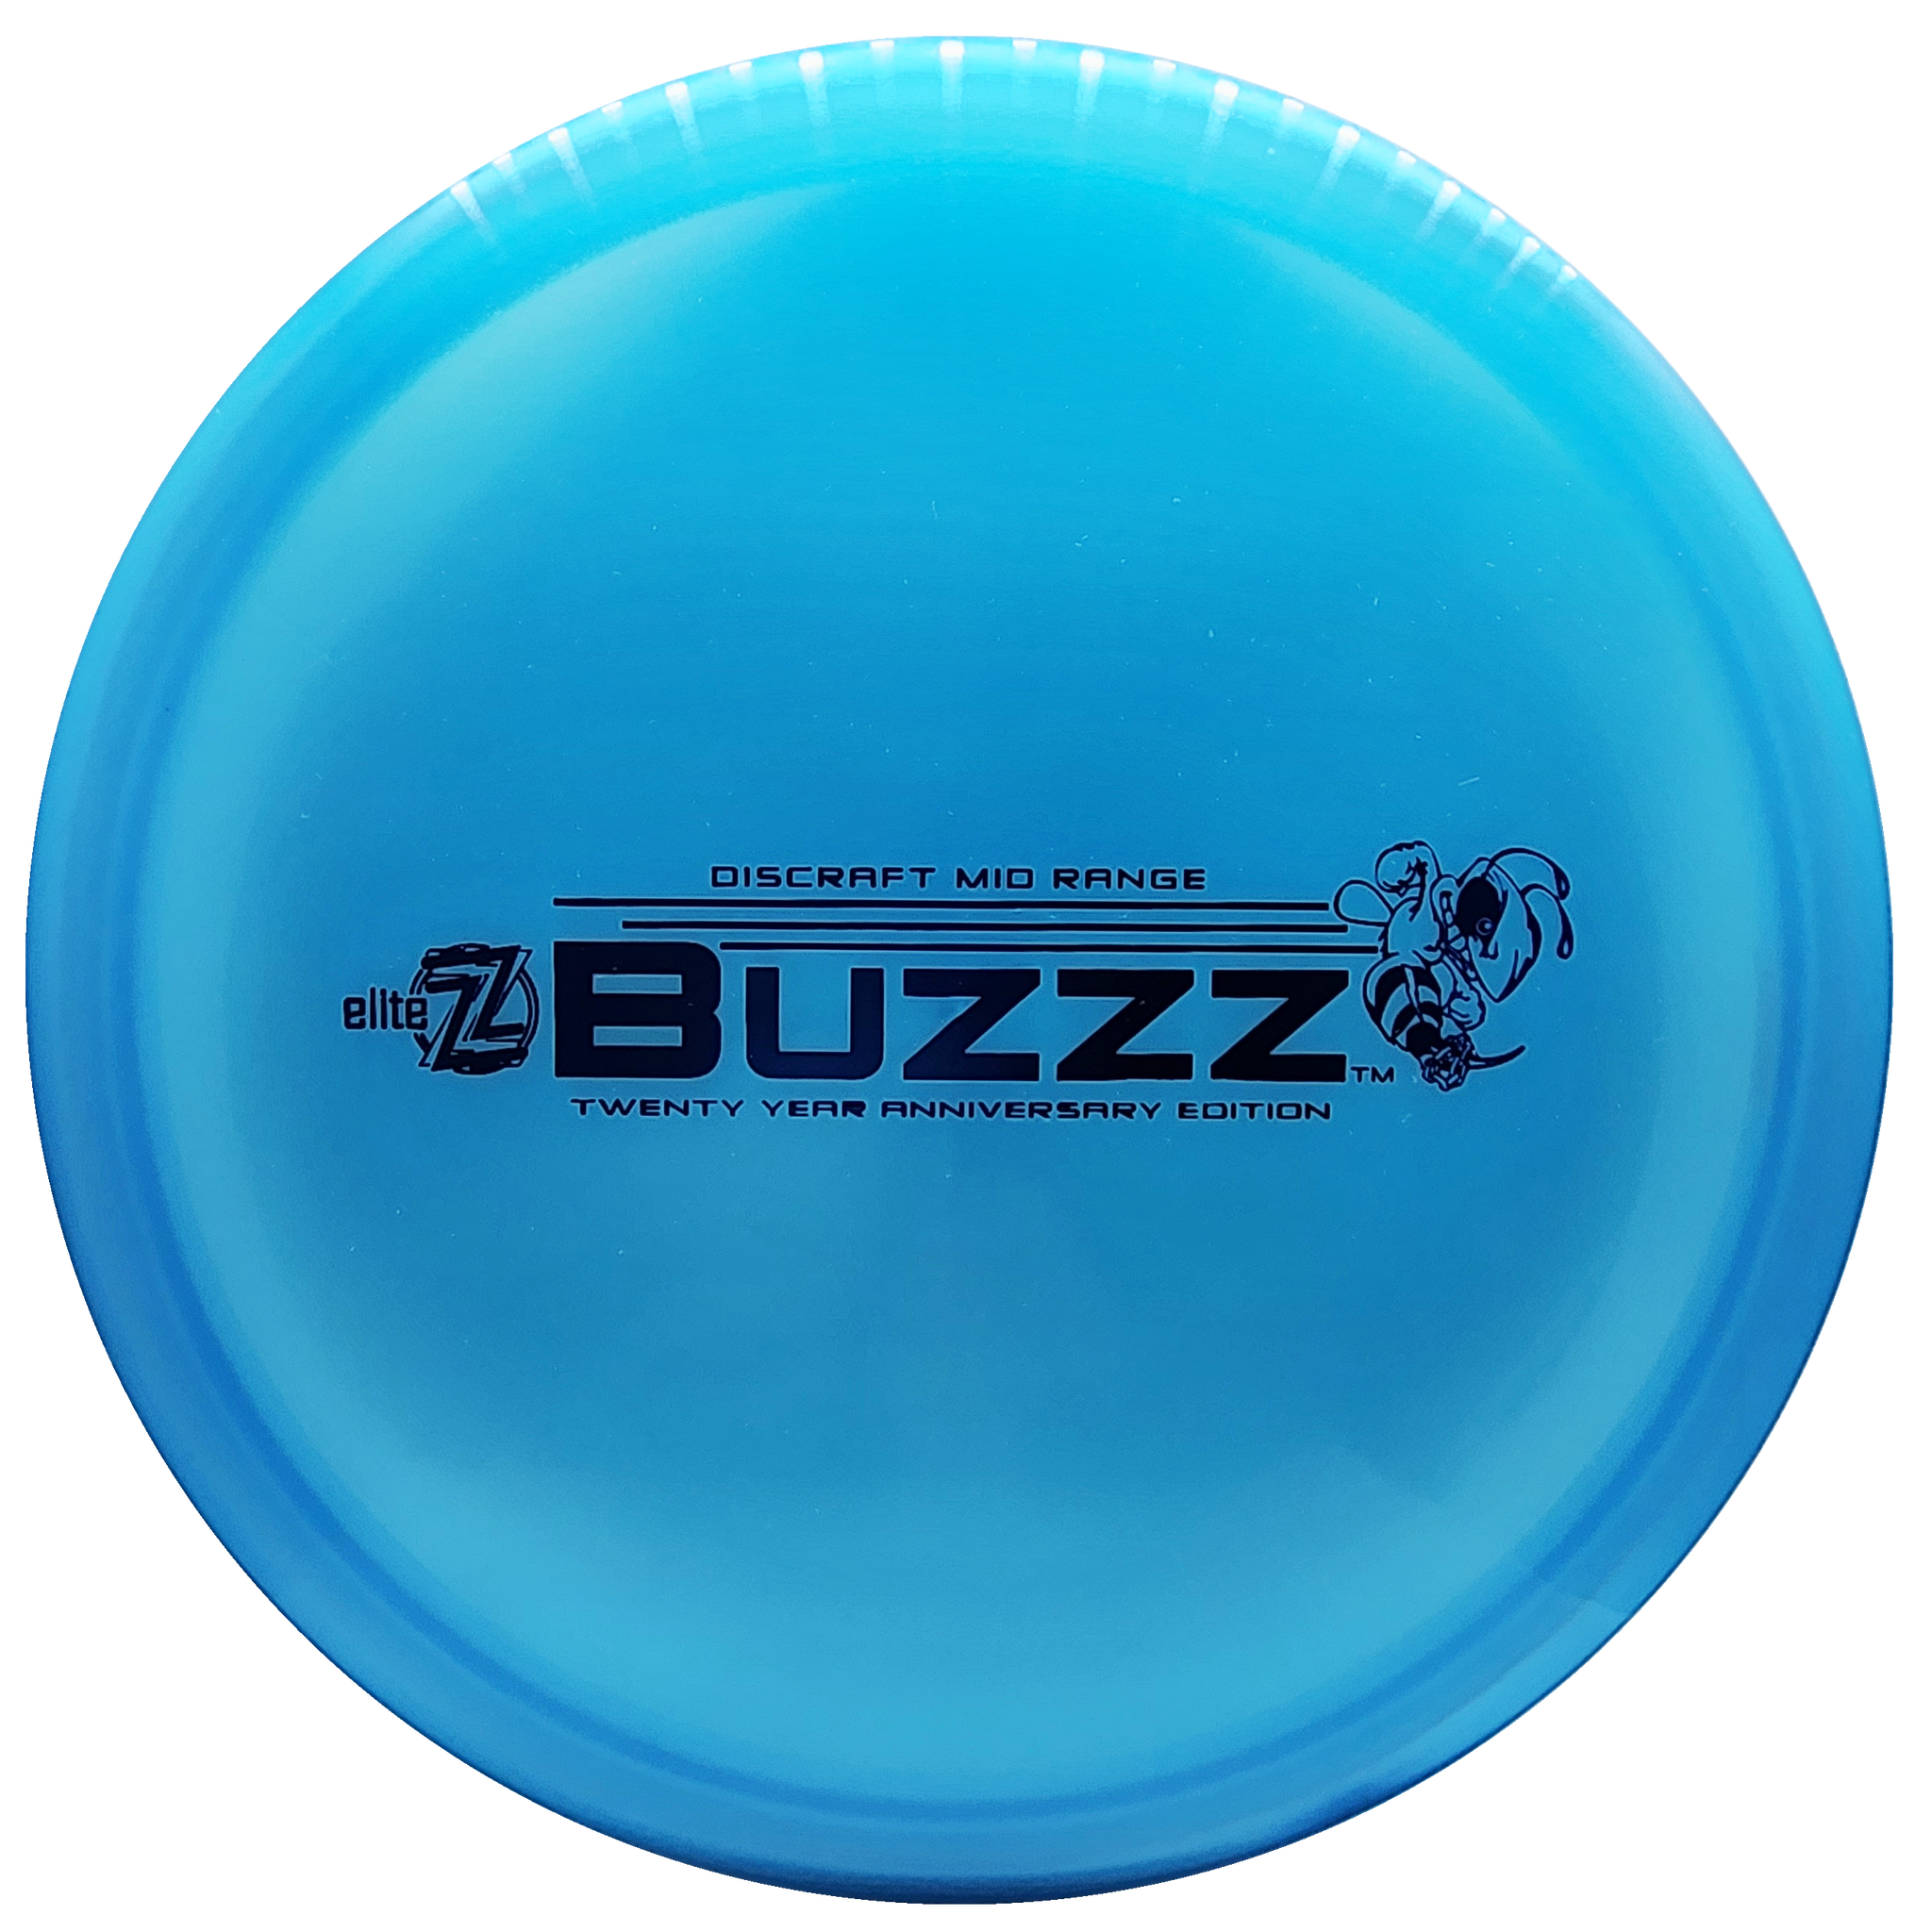 Discraft: Twenty Year Anniversary Edition Buzzz - Blue/Blue